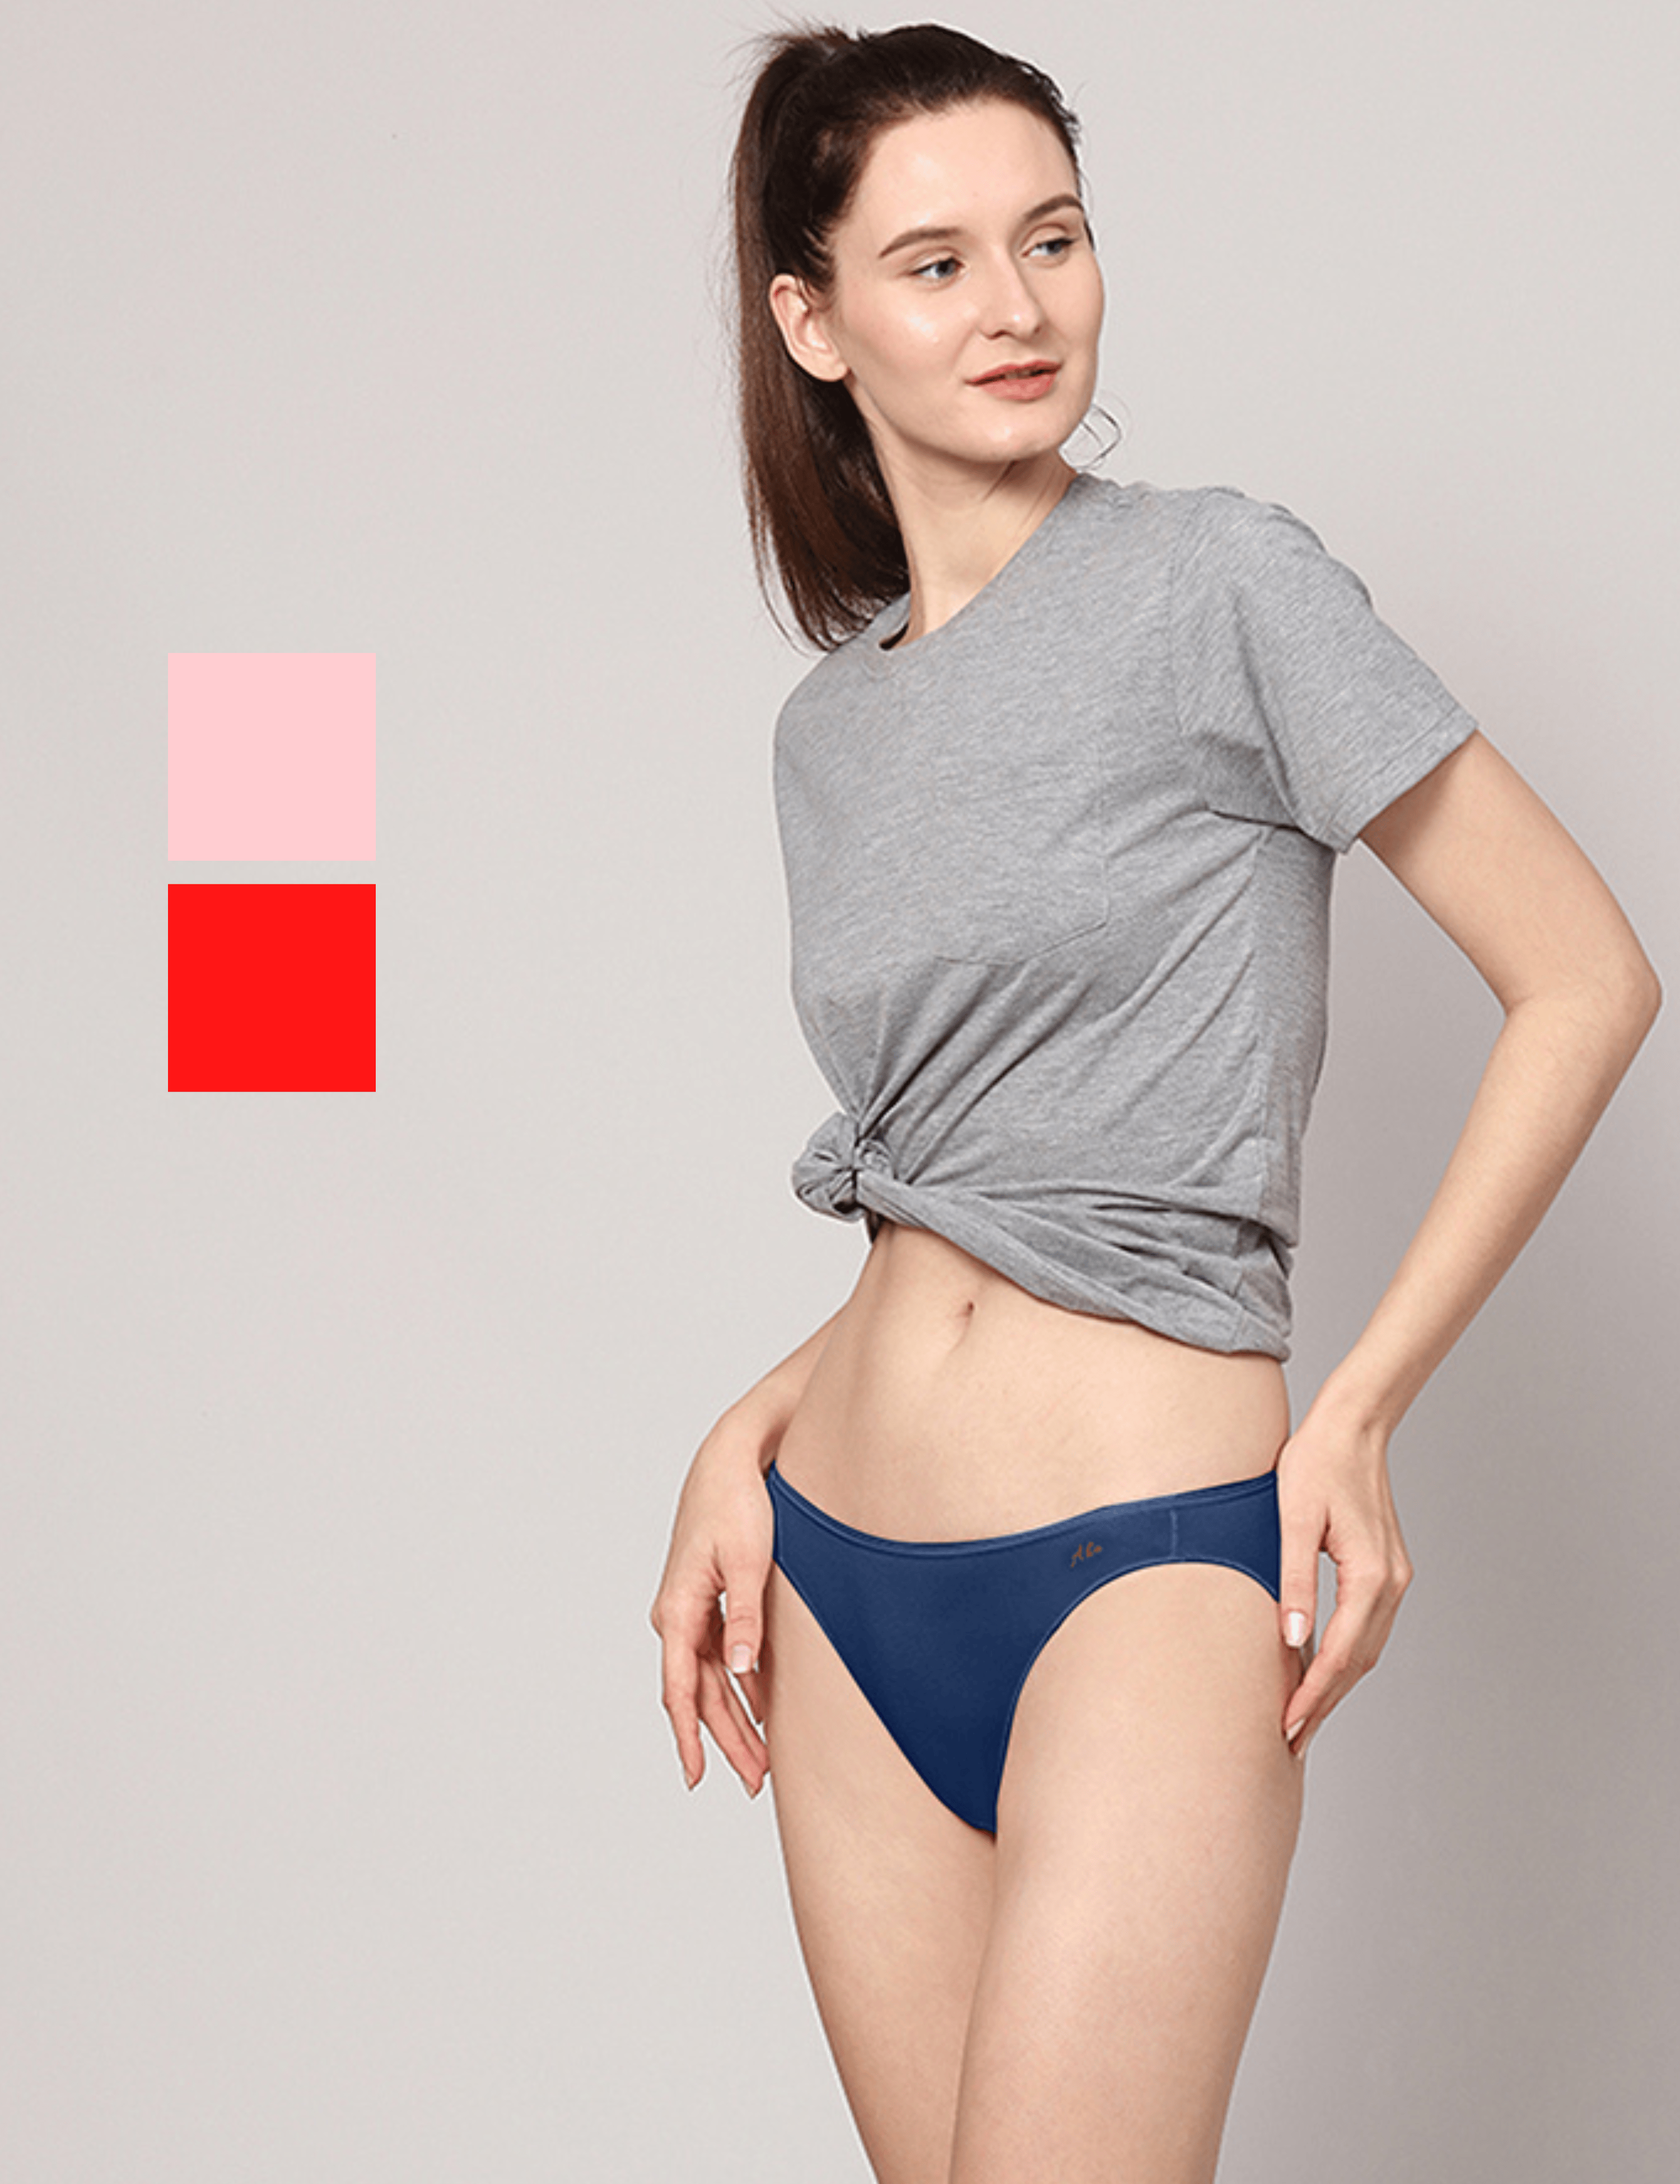 AshleyandAlvis | AshleyandAlvis Women's Panties Micro Modal, Anti Bacterial, Skinny Soft, Premium Bikini-No Itching, Sweat Proof, Double In-seam Gusset